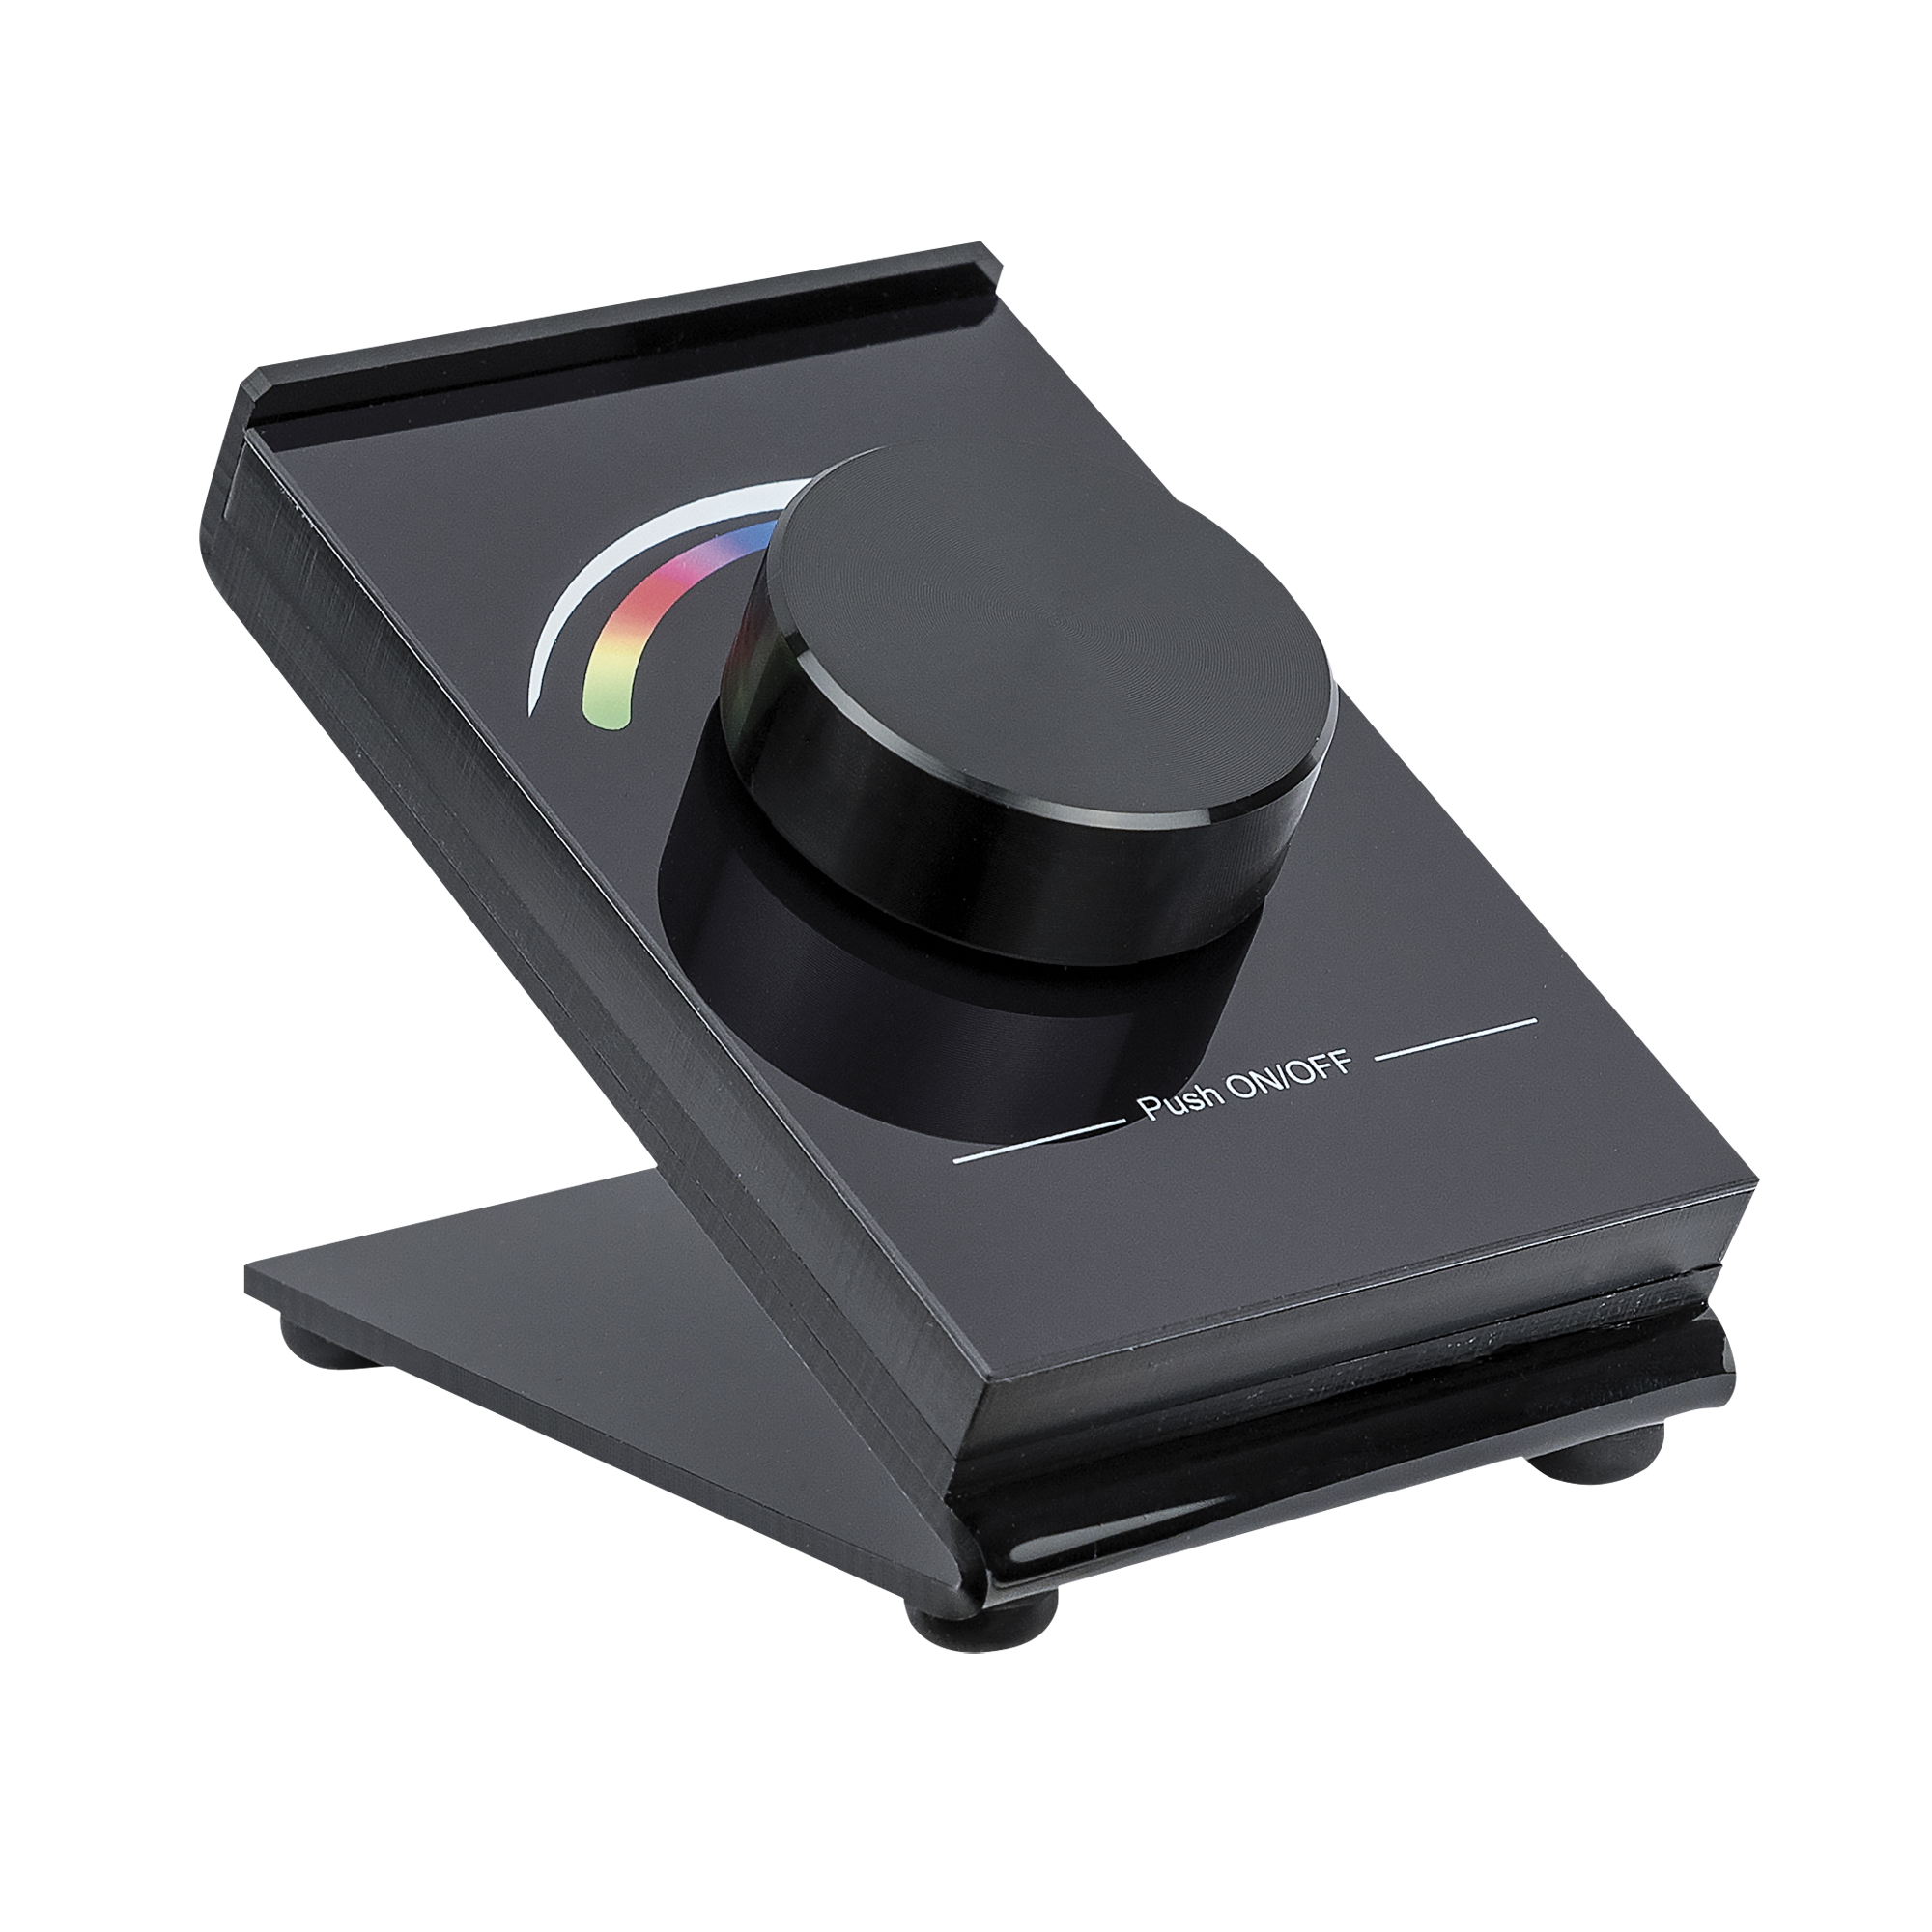 Artecta Play RGB Desk 868 mHz - Ein/Aus - Dimmung - Farbe